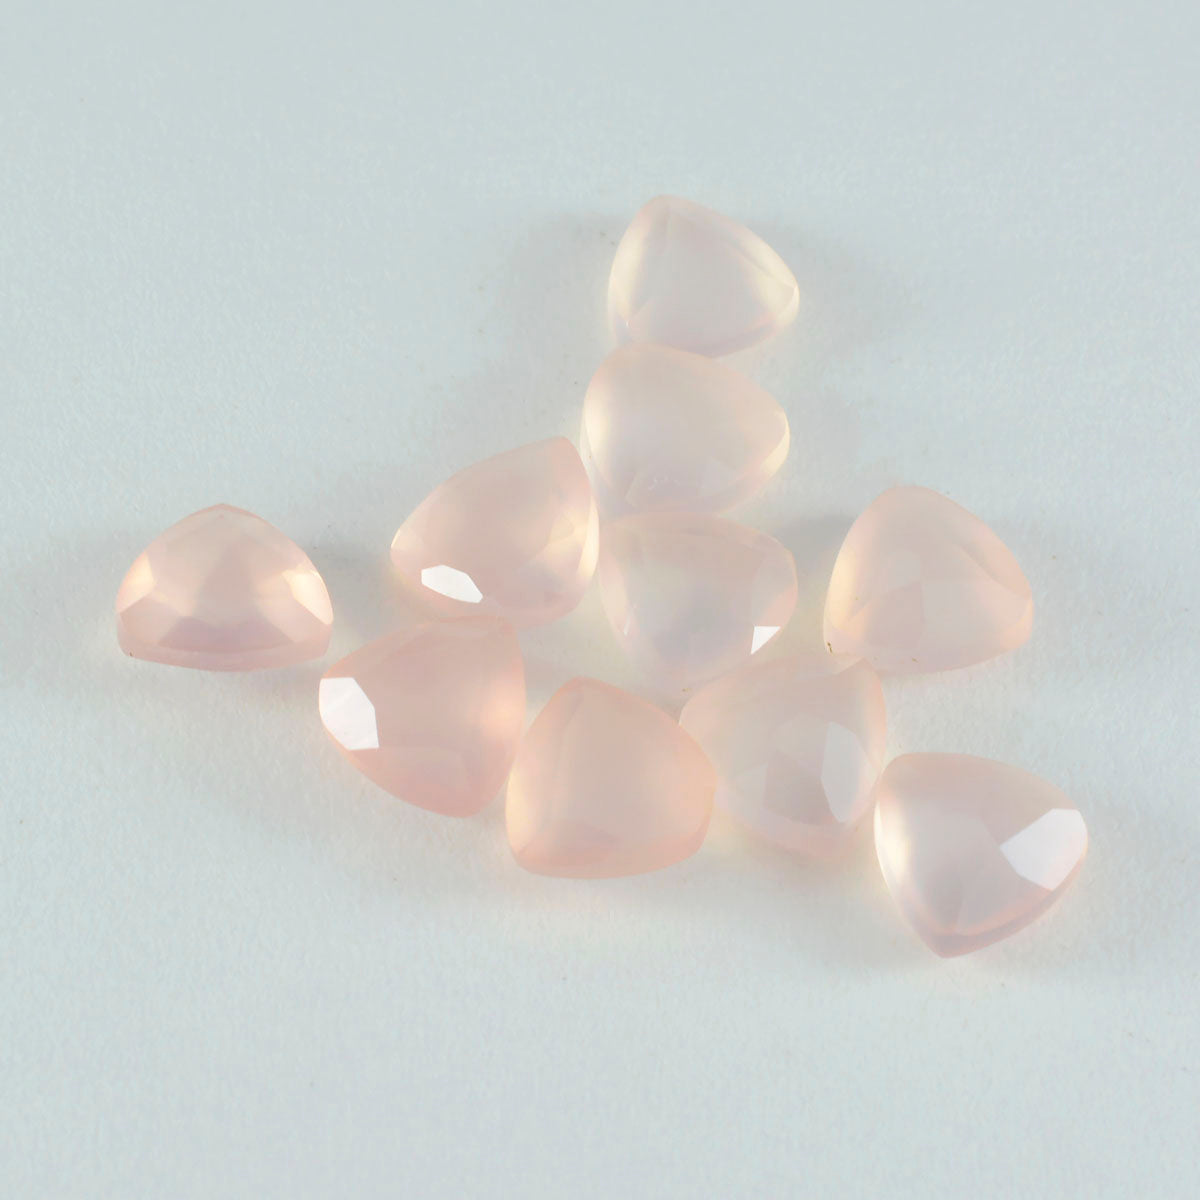 Riyogems 1PC Pink Rose Quartz Faceted 10x10 mm Trillion Shape A+1 Quality Gem